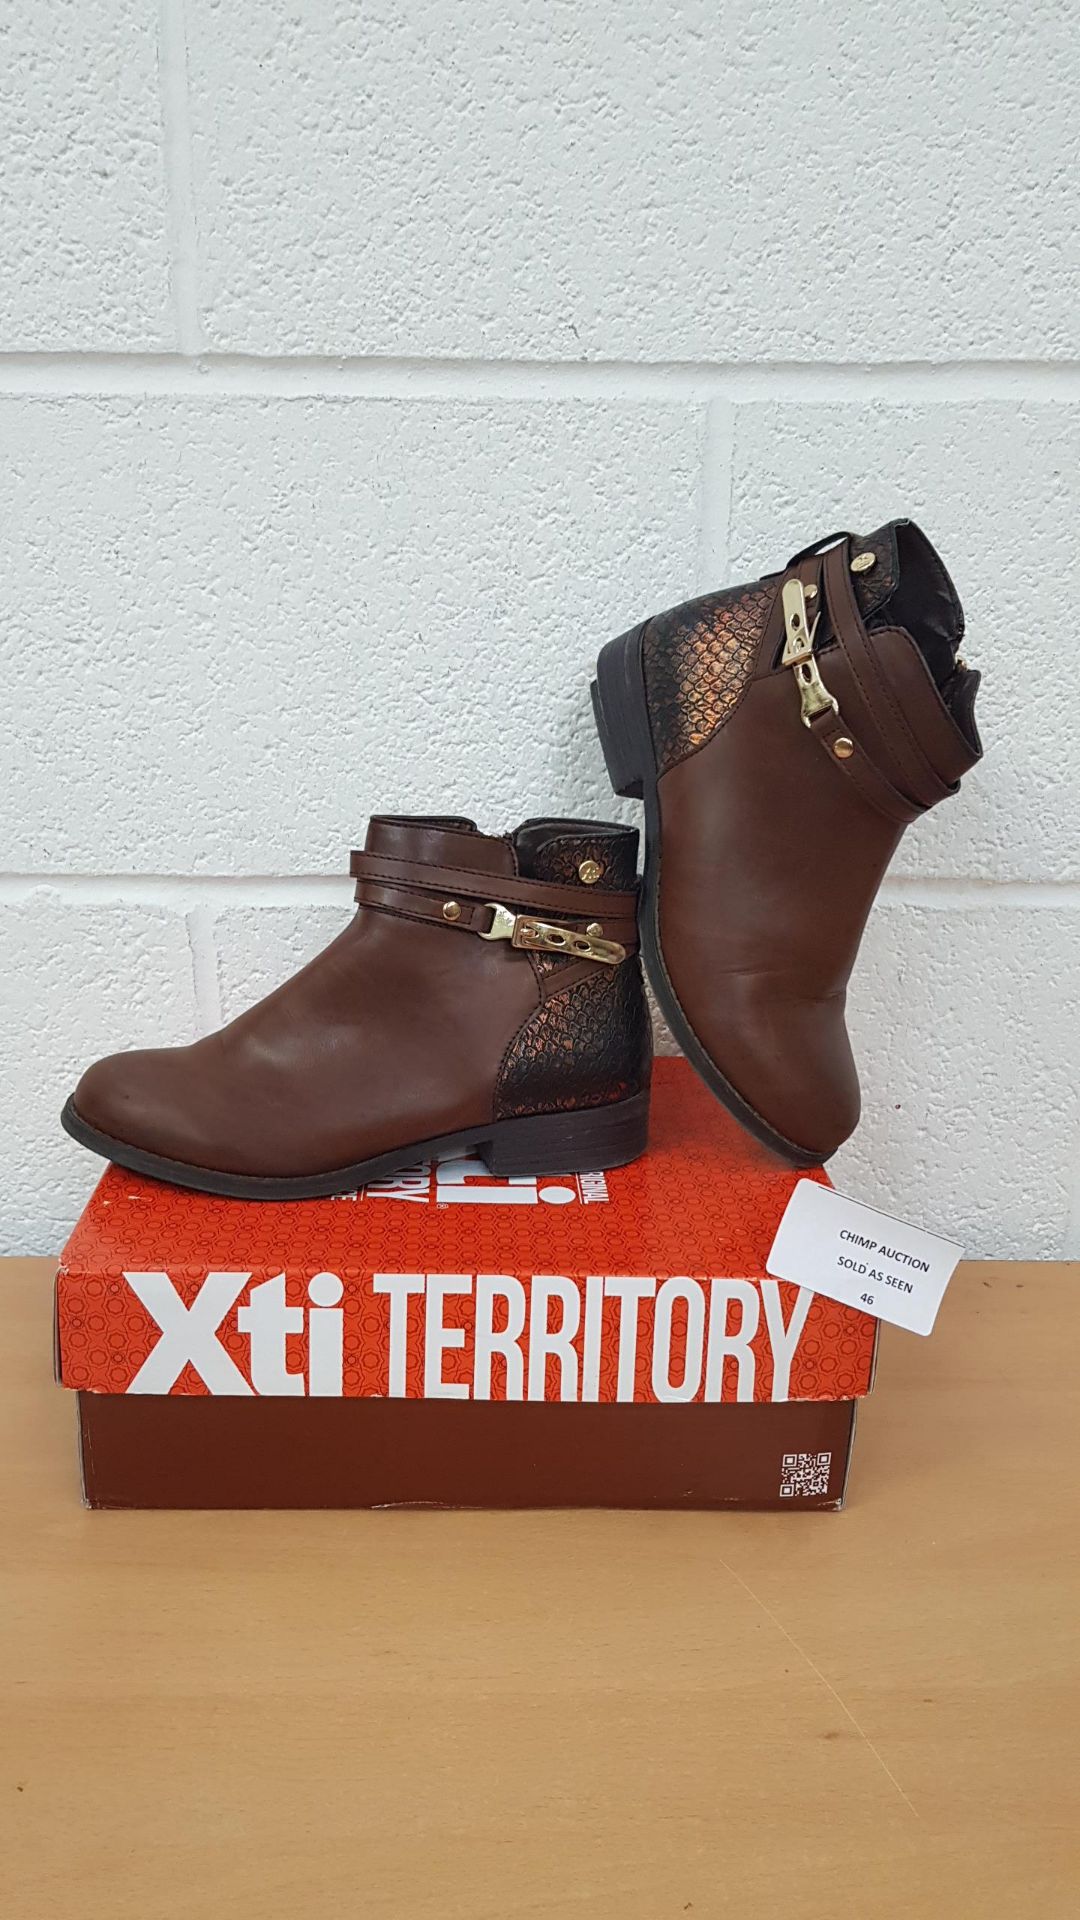 Xti Territory ladies boots UK 4 RRP £79.99